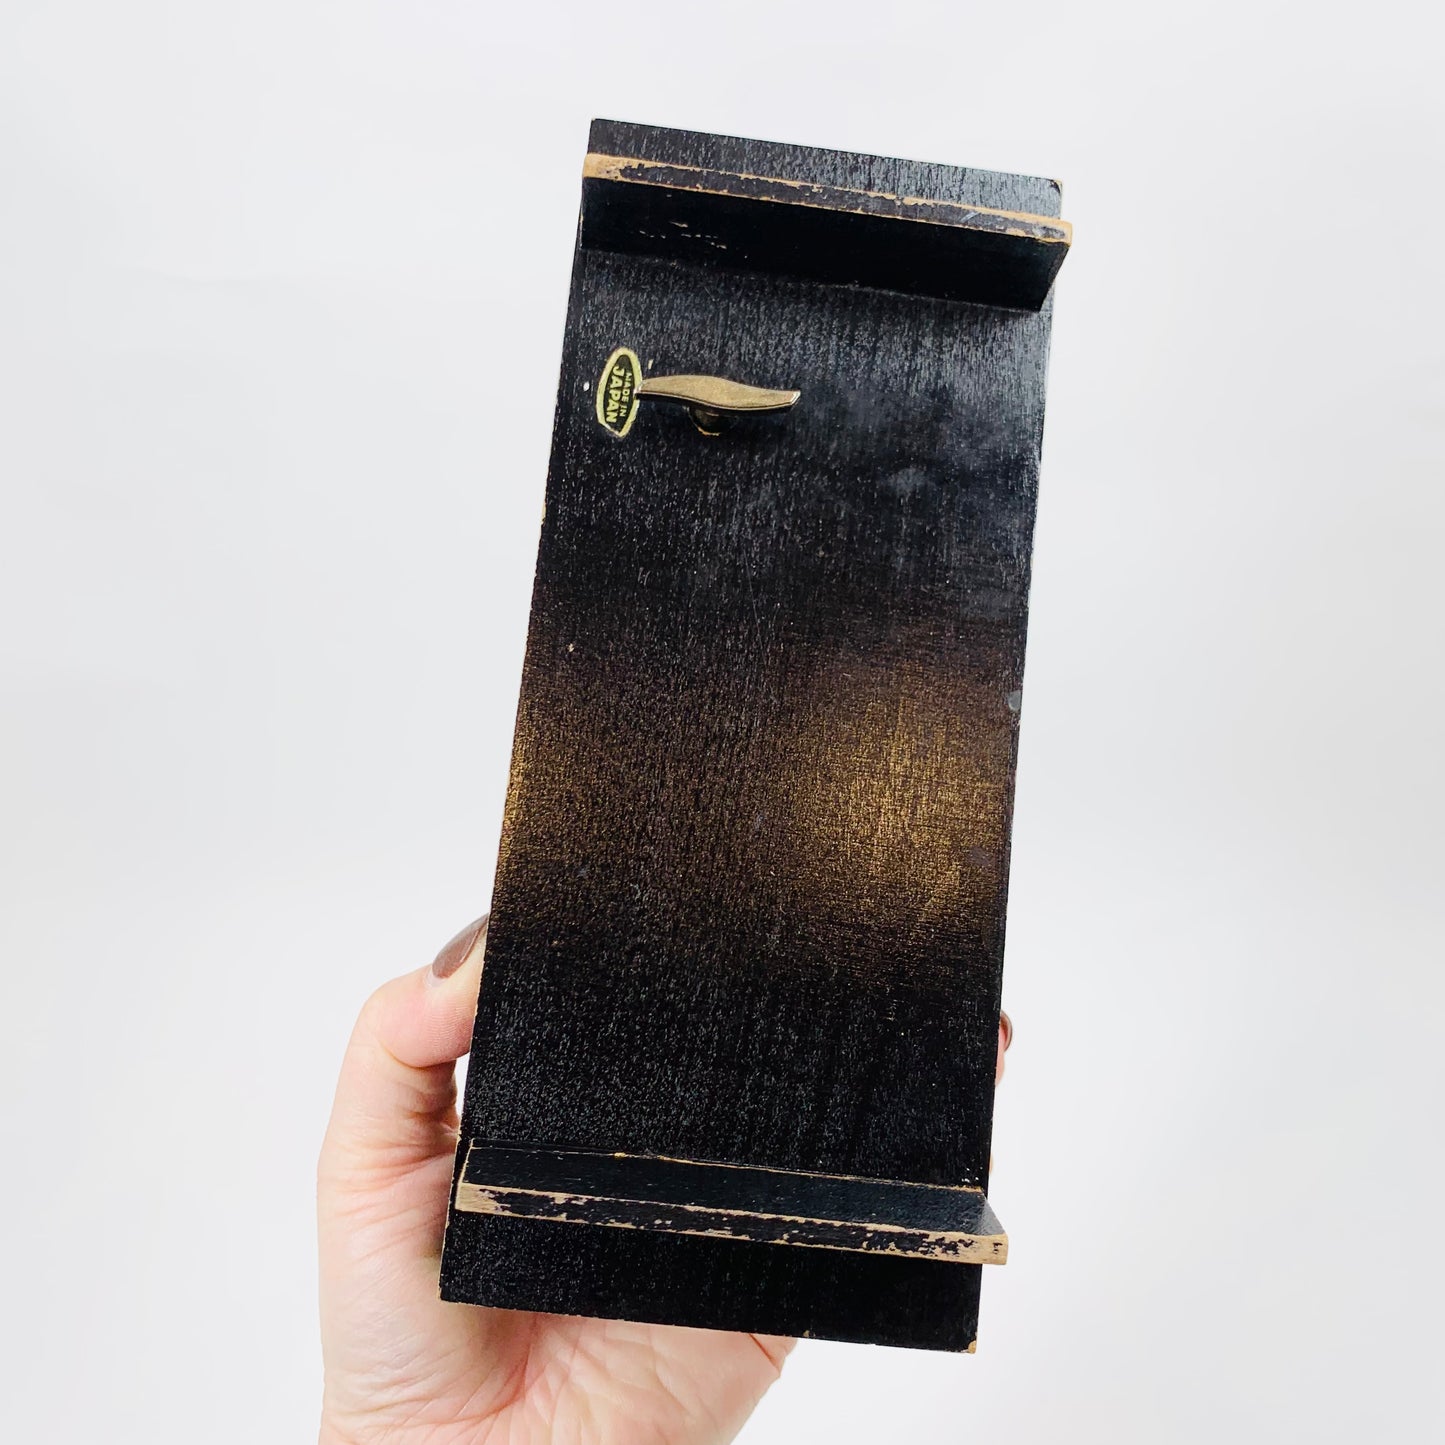 Stunning Midcentury Japanese wood jewellery box with cameo